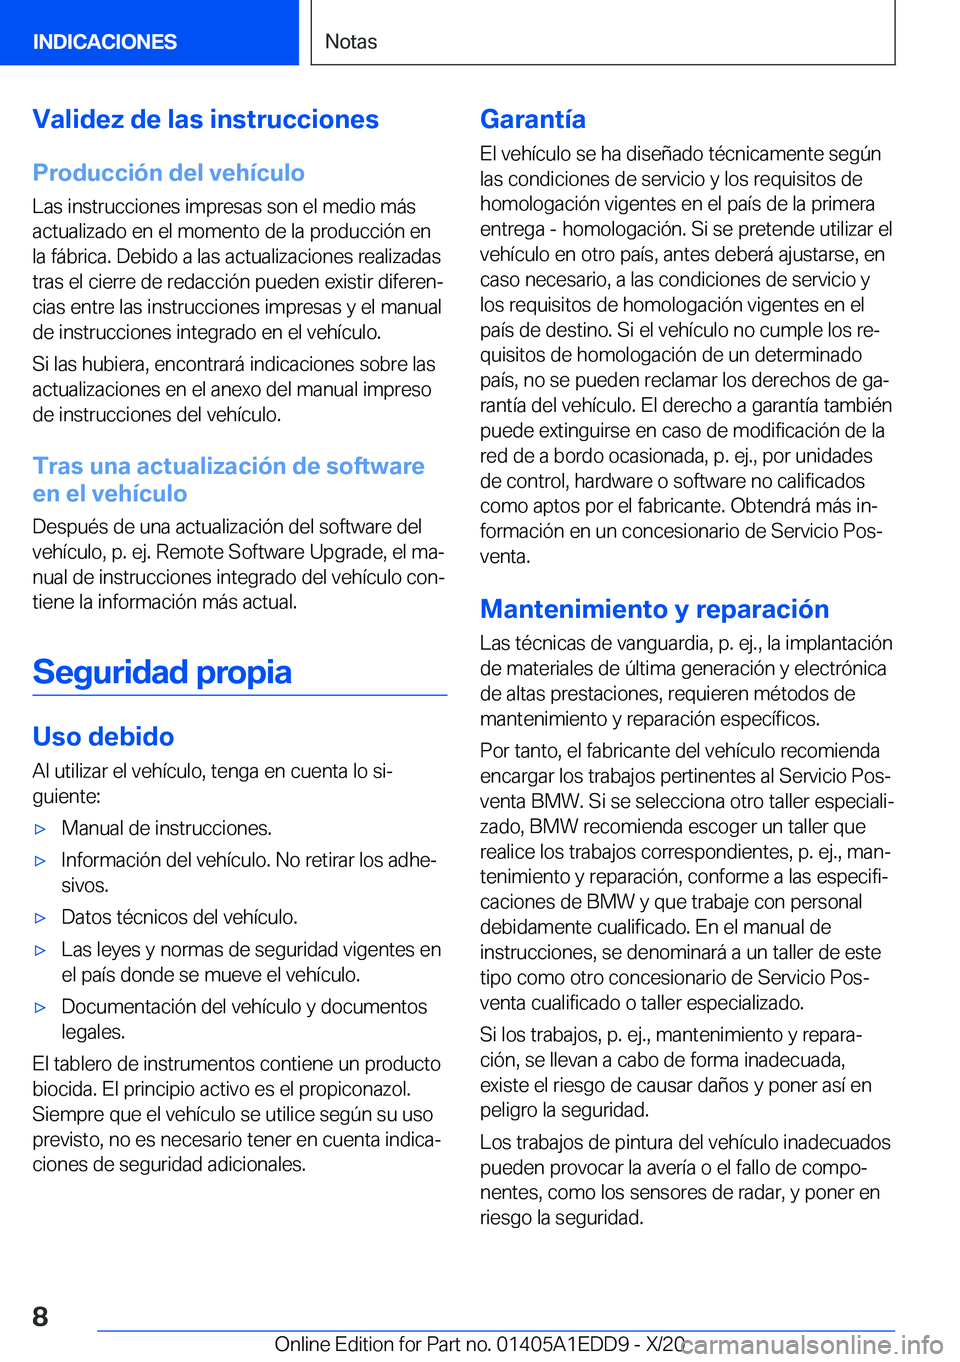 BMW 8 SERIES CONVERTIBLE 2021  Manuales de Empleo (in Spanish) �V�a�l�i�d�e�z��d�e��l�a�s��i�n�s�t�r�u�c�c�i�o�n�e�s�P�r�o�d�u�c�c�i�